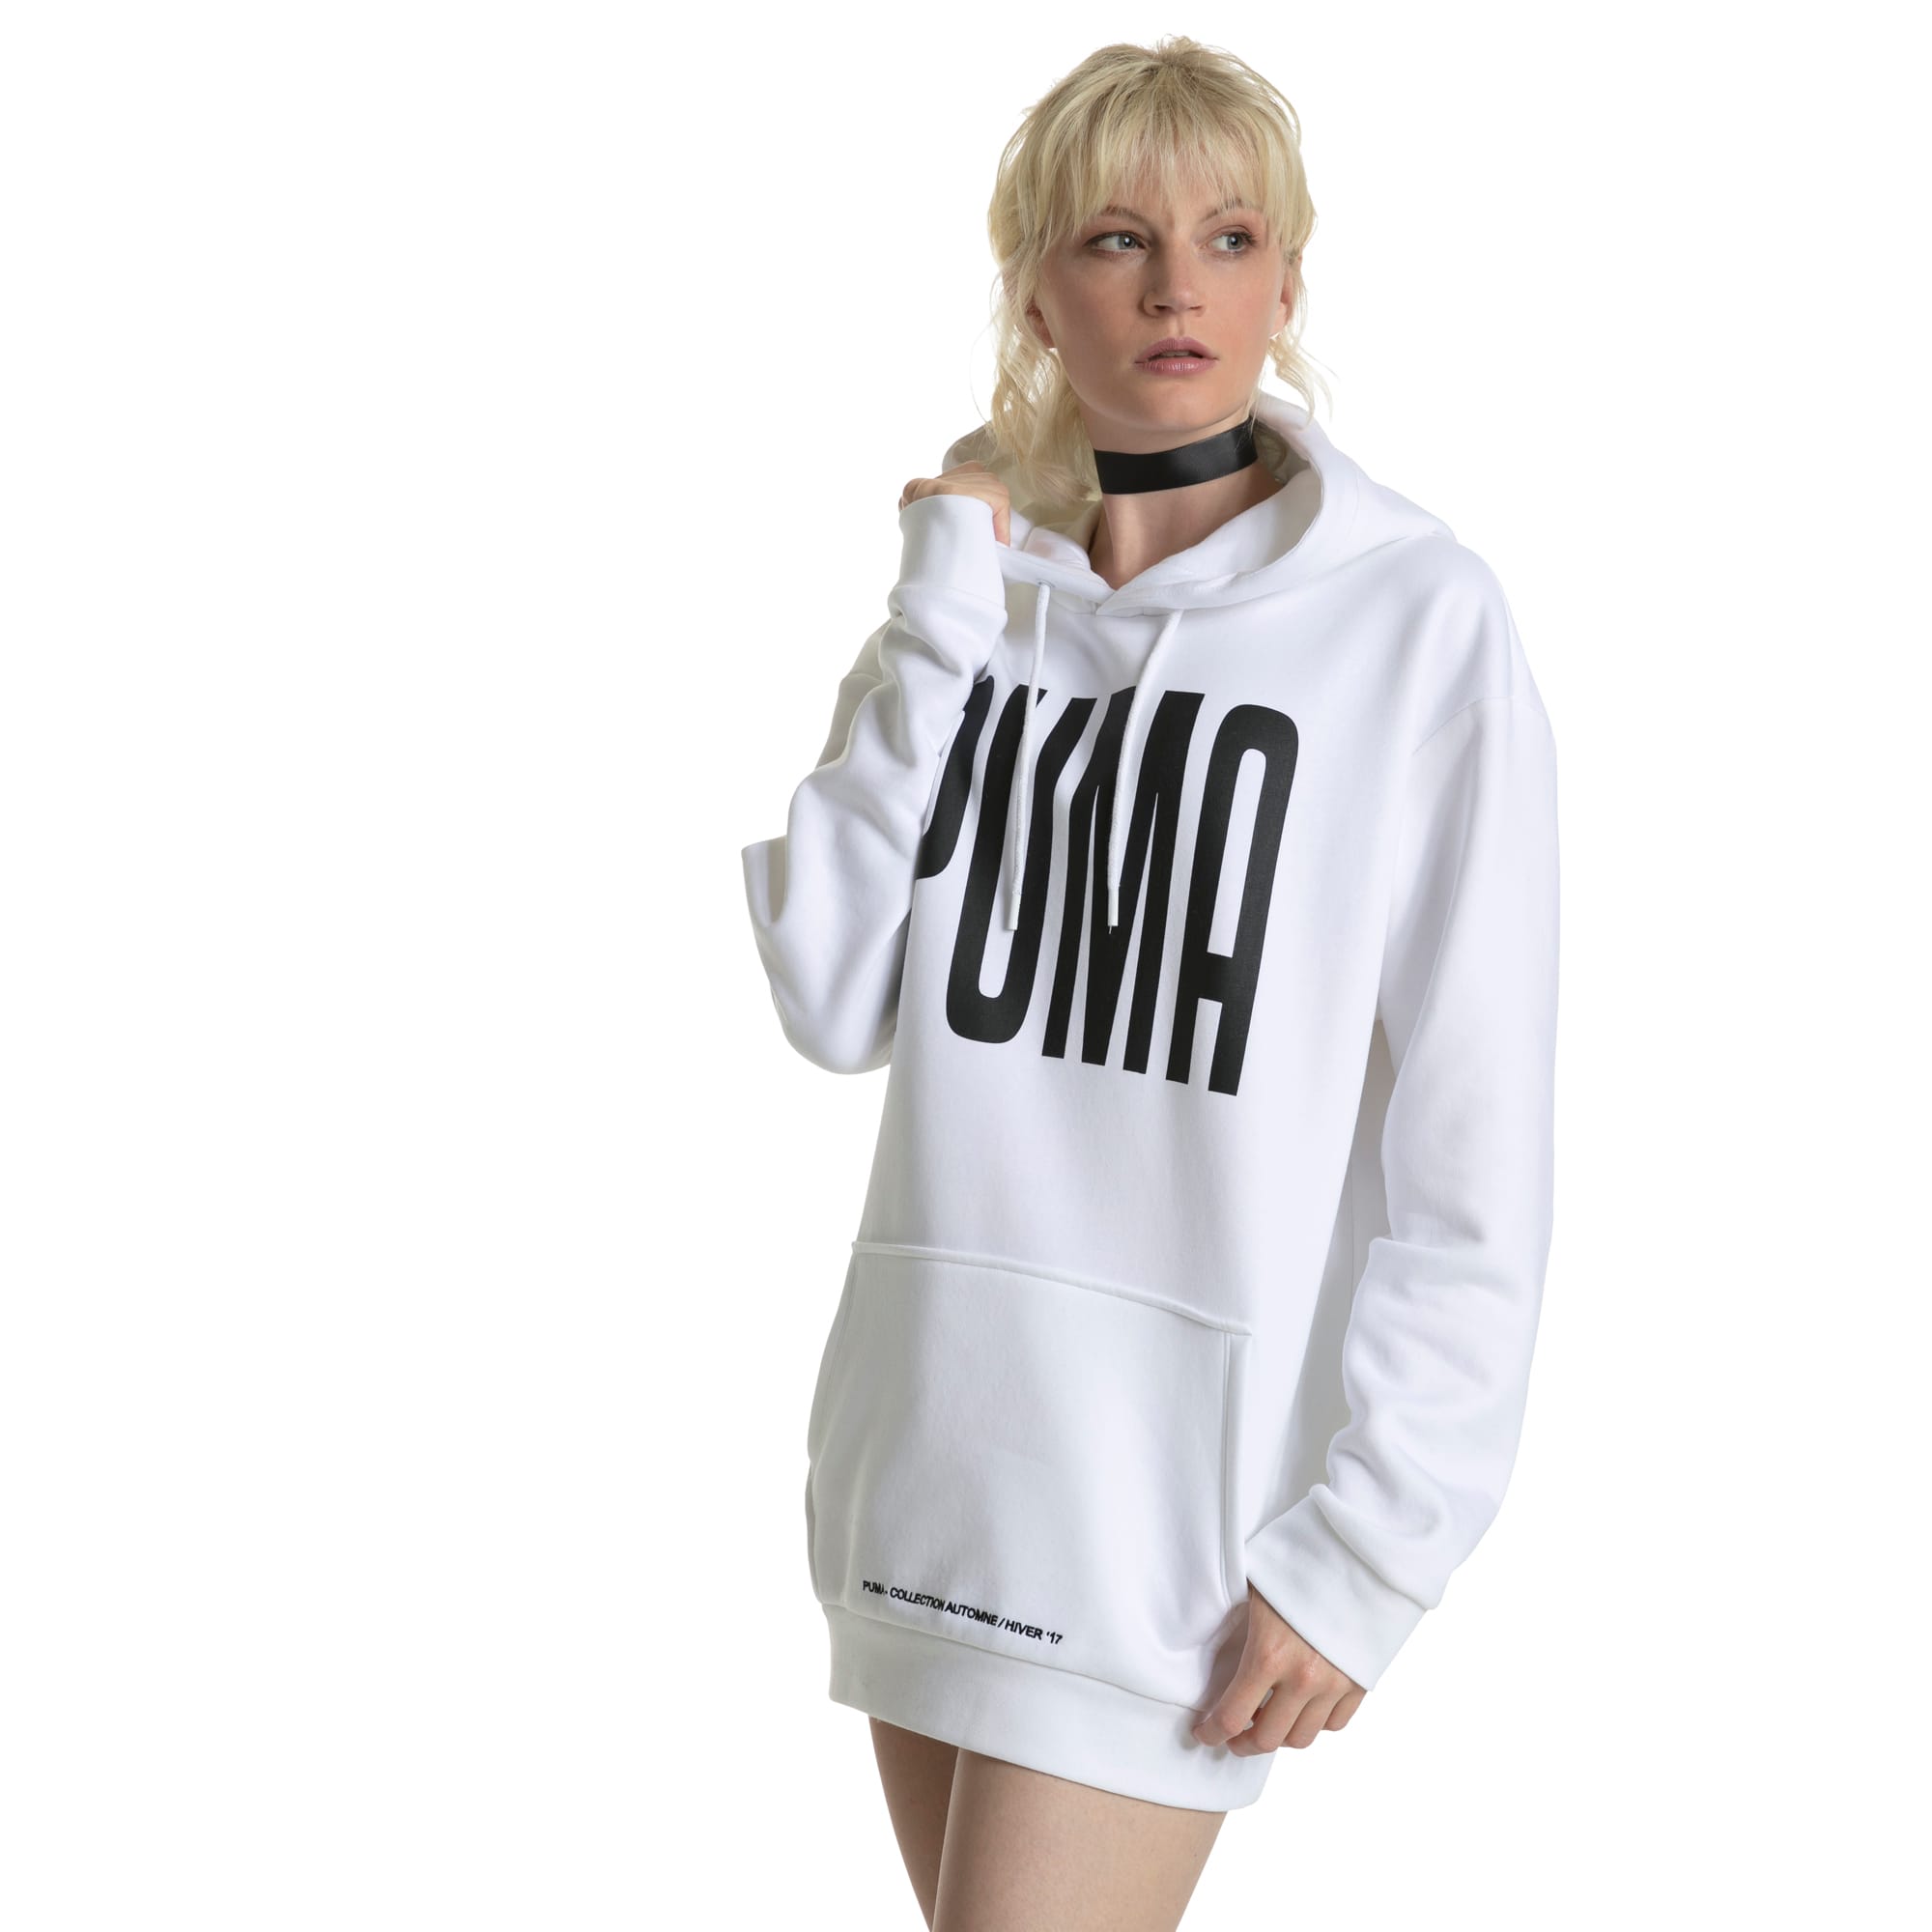 oversized hoodie puma